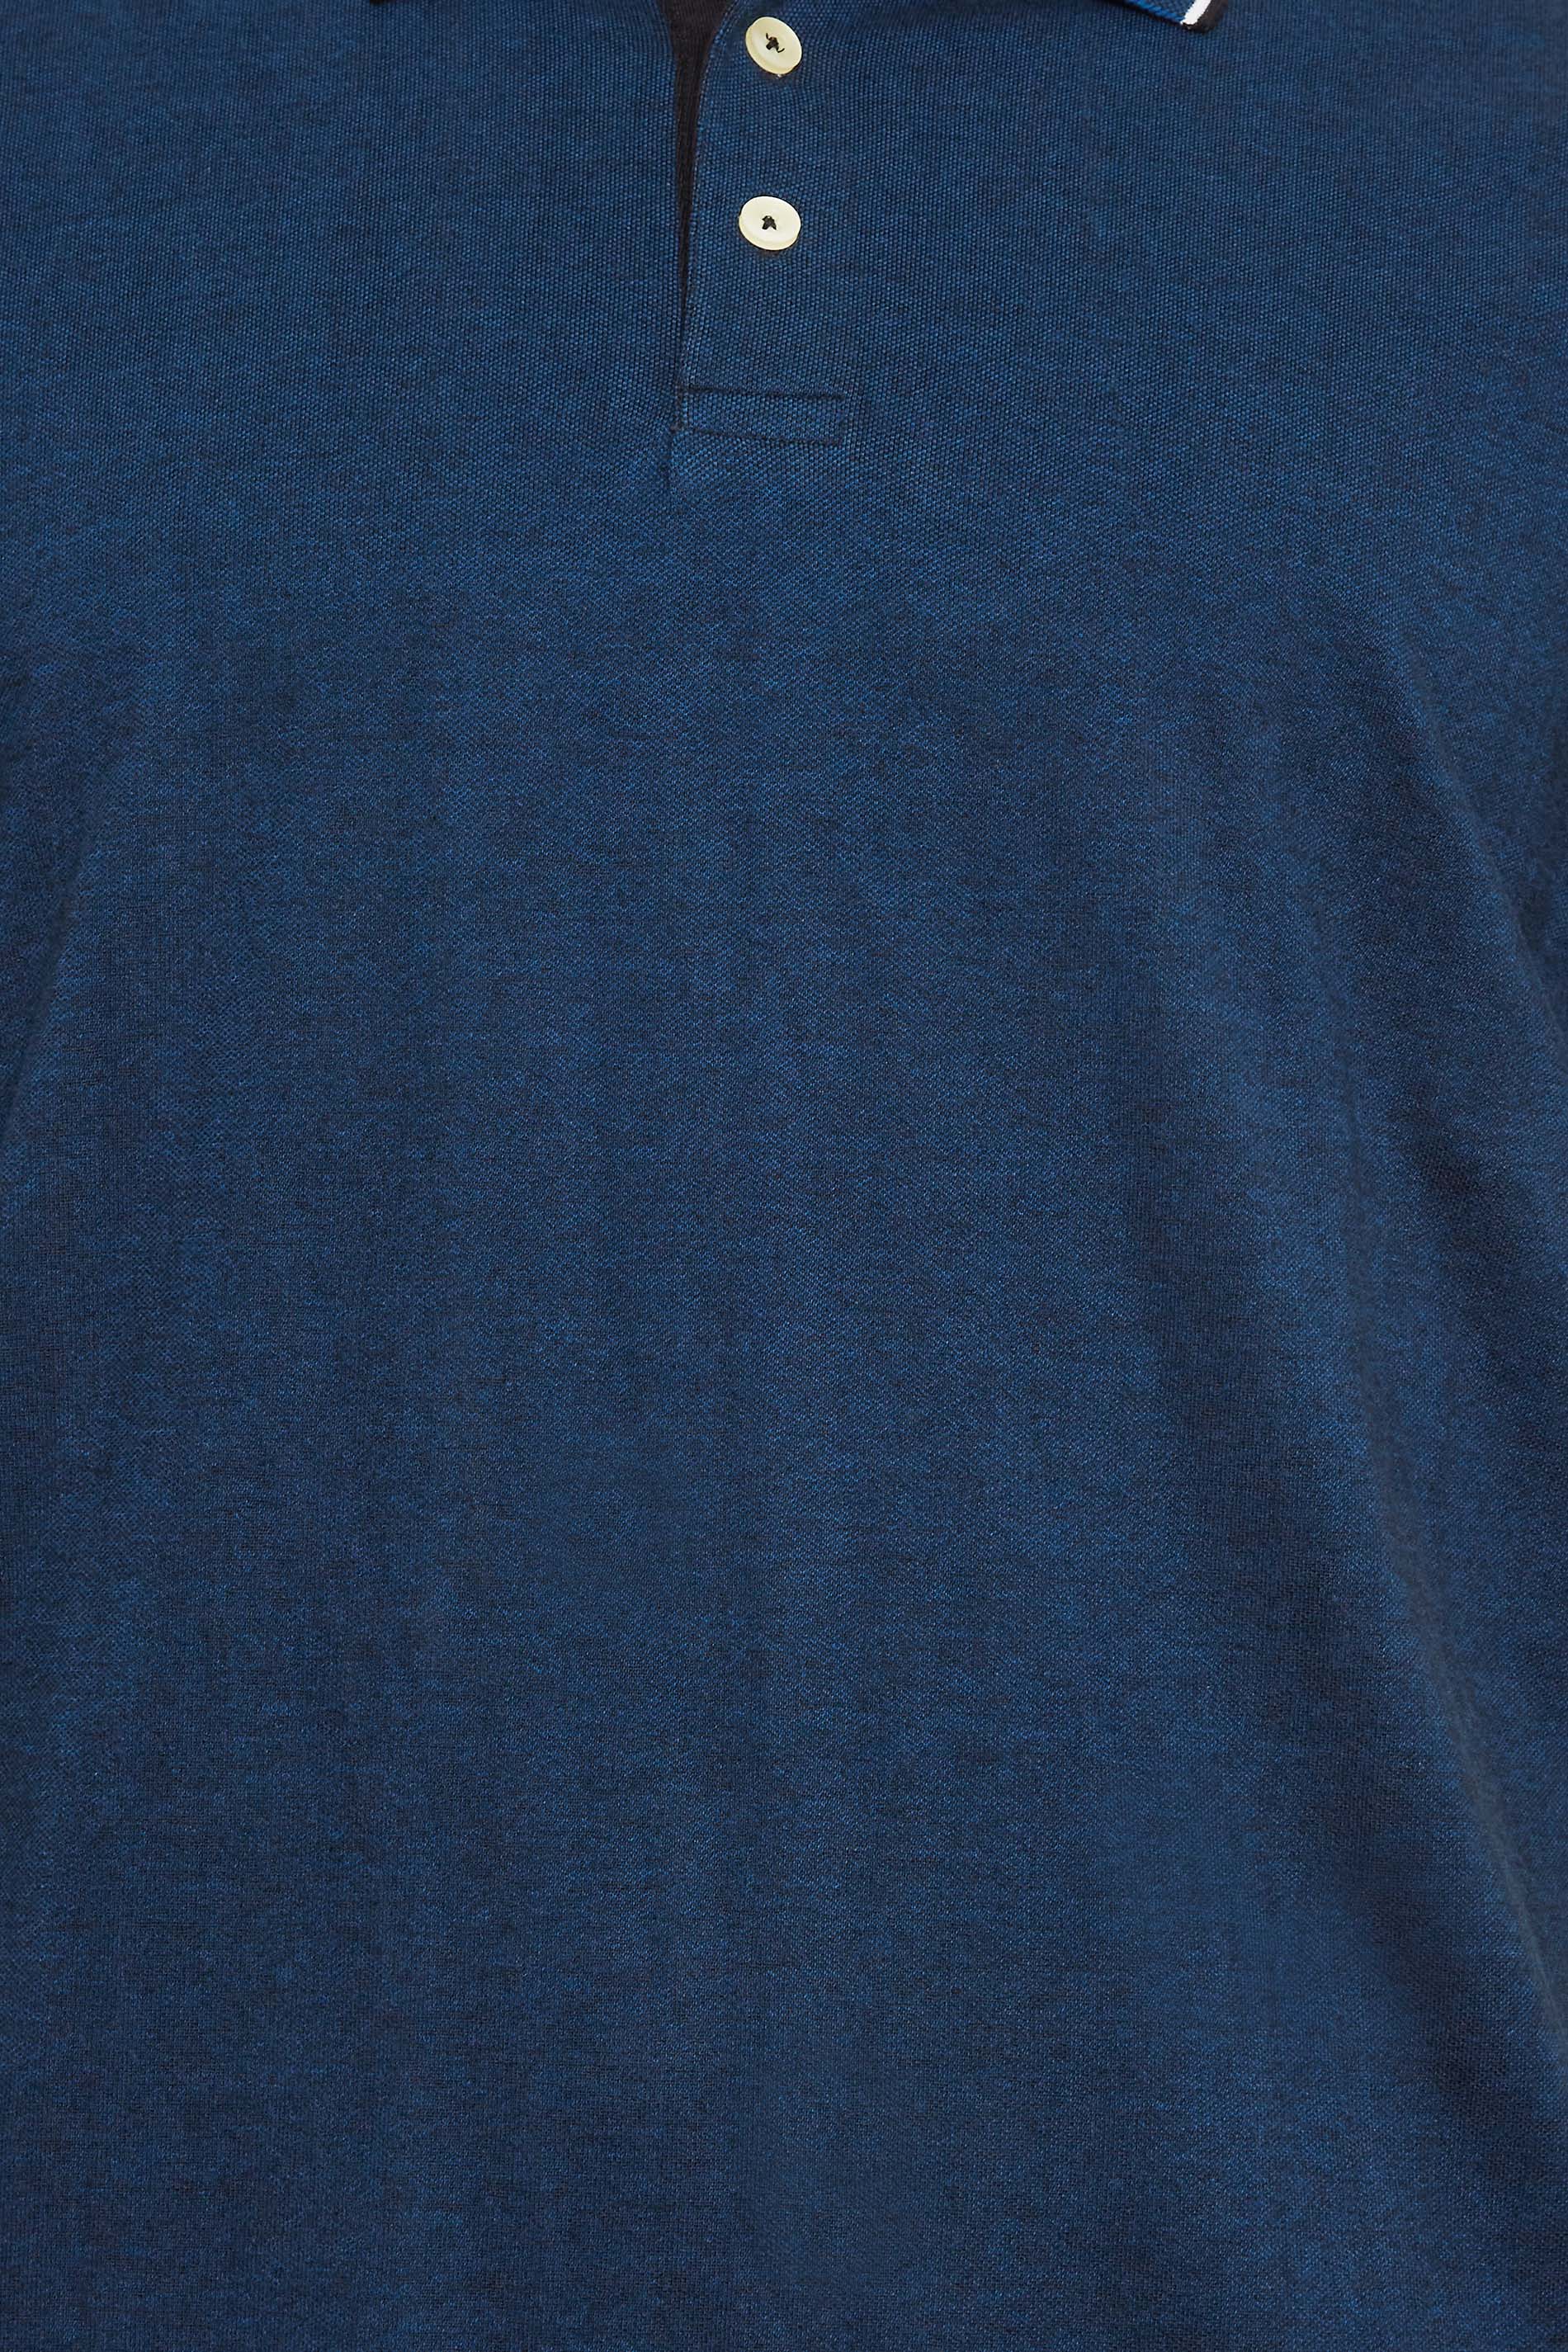 BadRhino Big & Tall Dark Blue Birdseye Polo Shirt | BadRhino 3